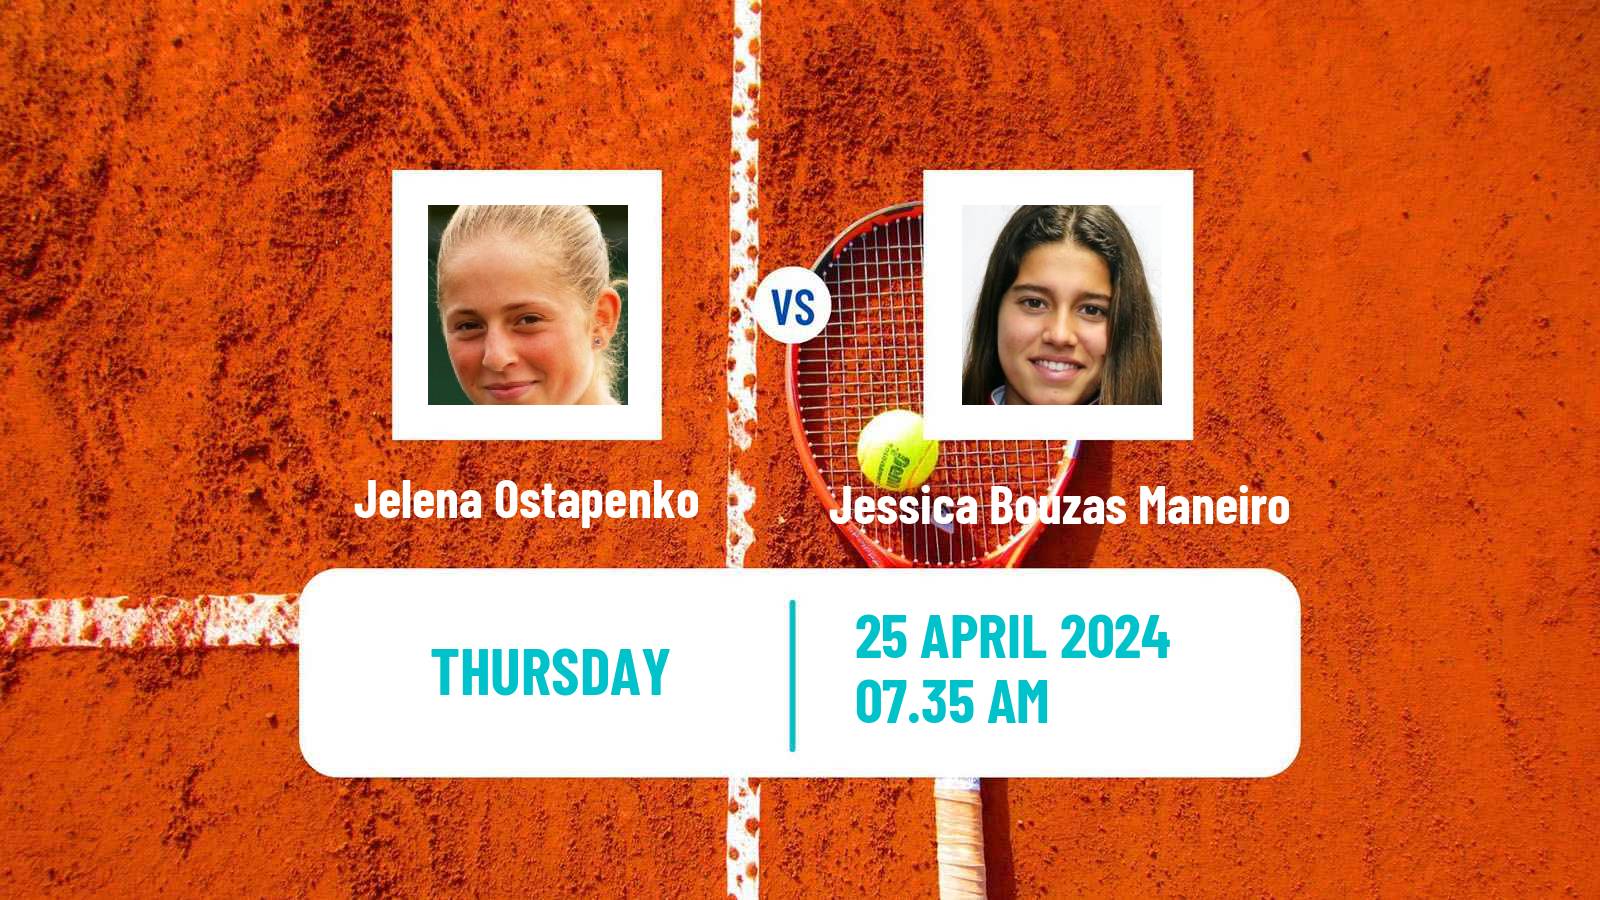 Tennis WTA Madrid Jelena Ostapenko - Jessica Bouzas Maneiro